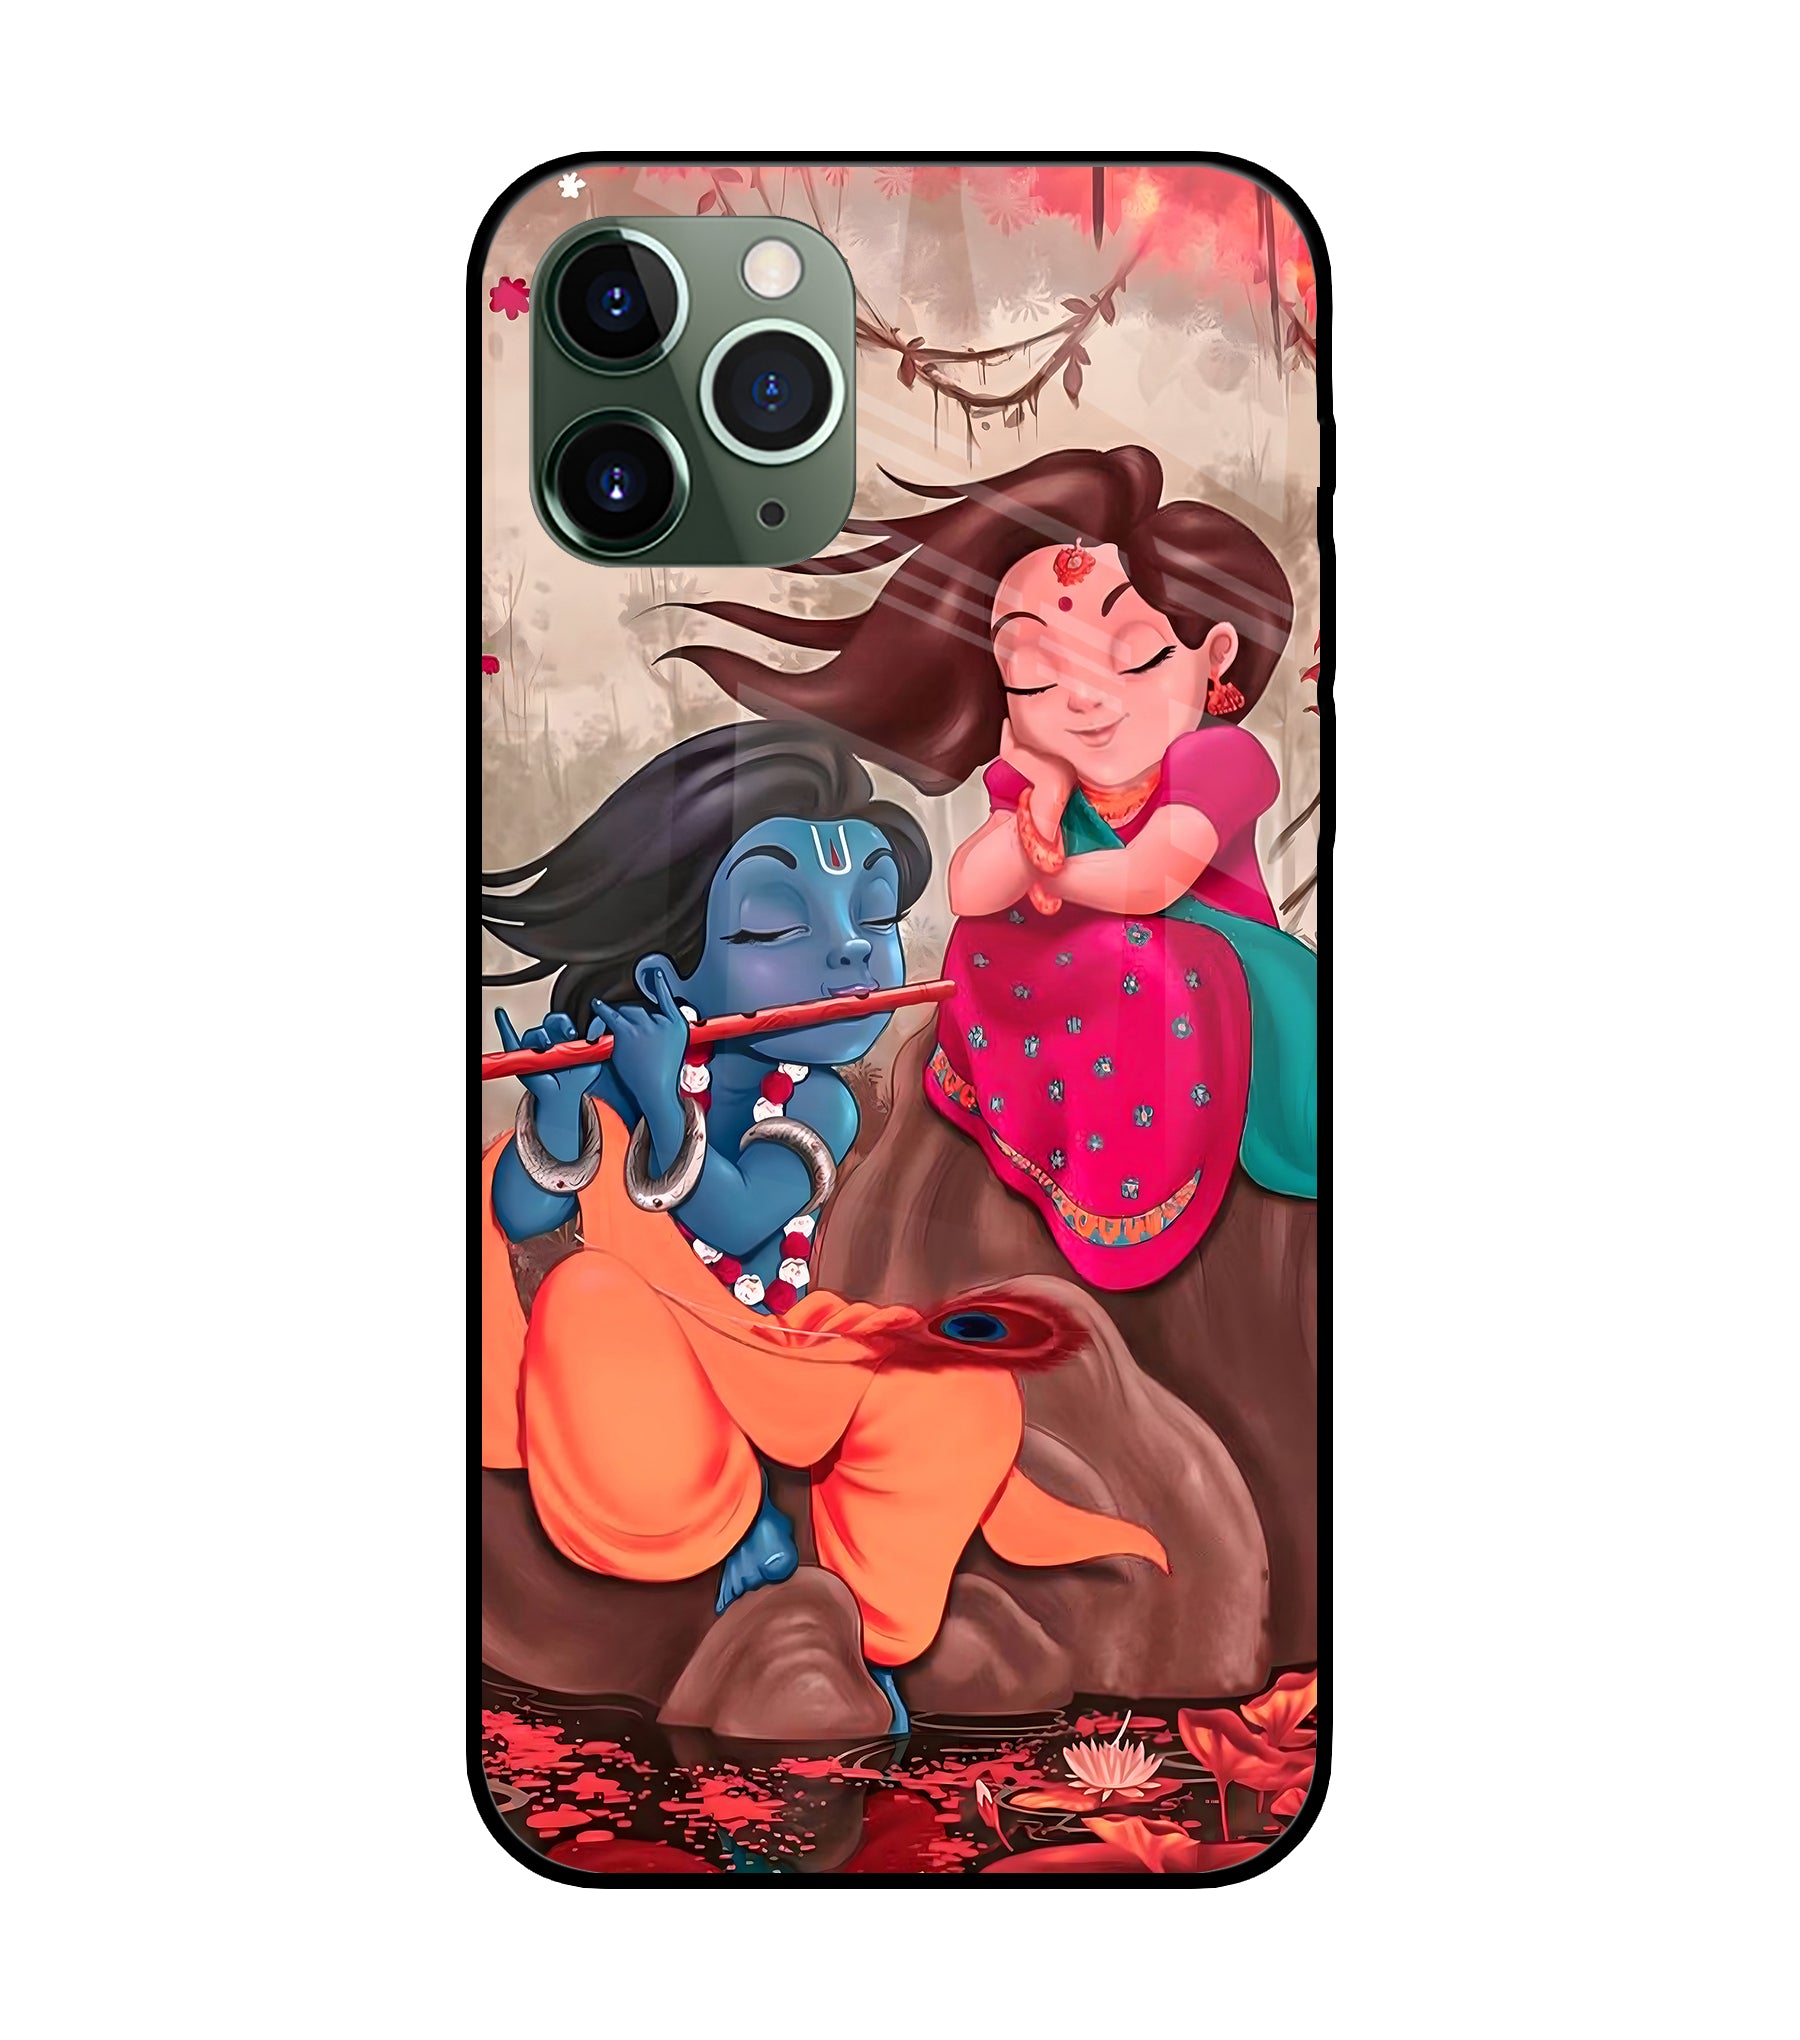 Radhe Krishna iPhone 11 Pro Max Glass Cover